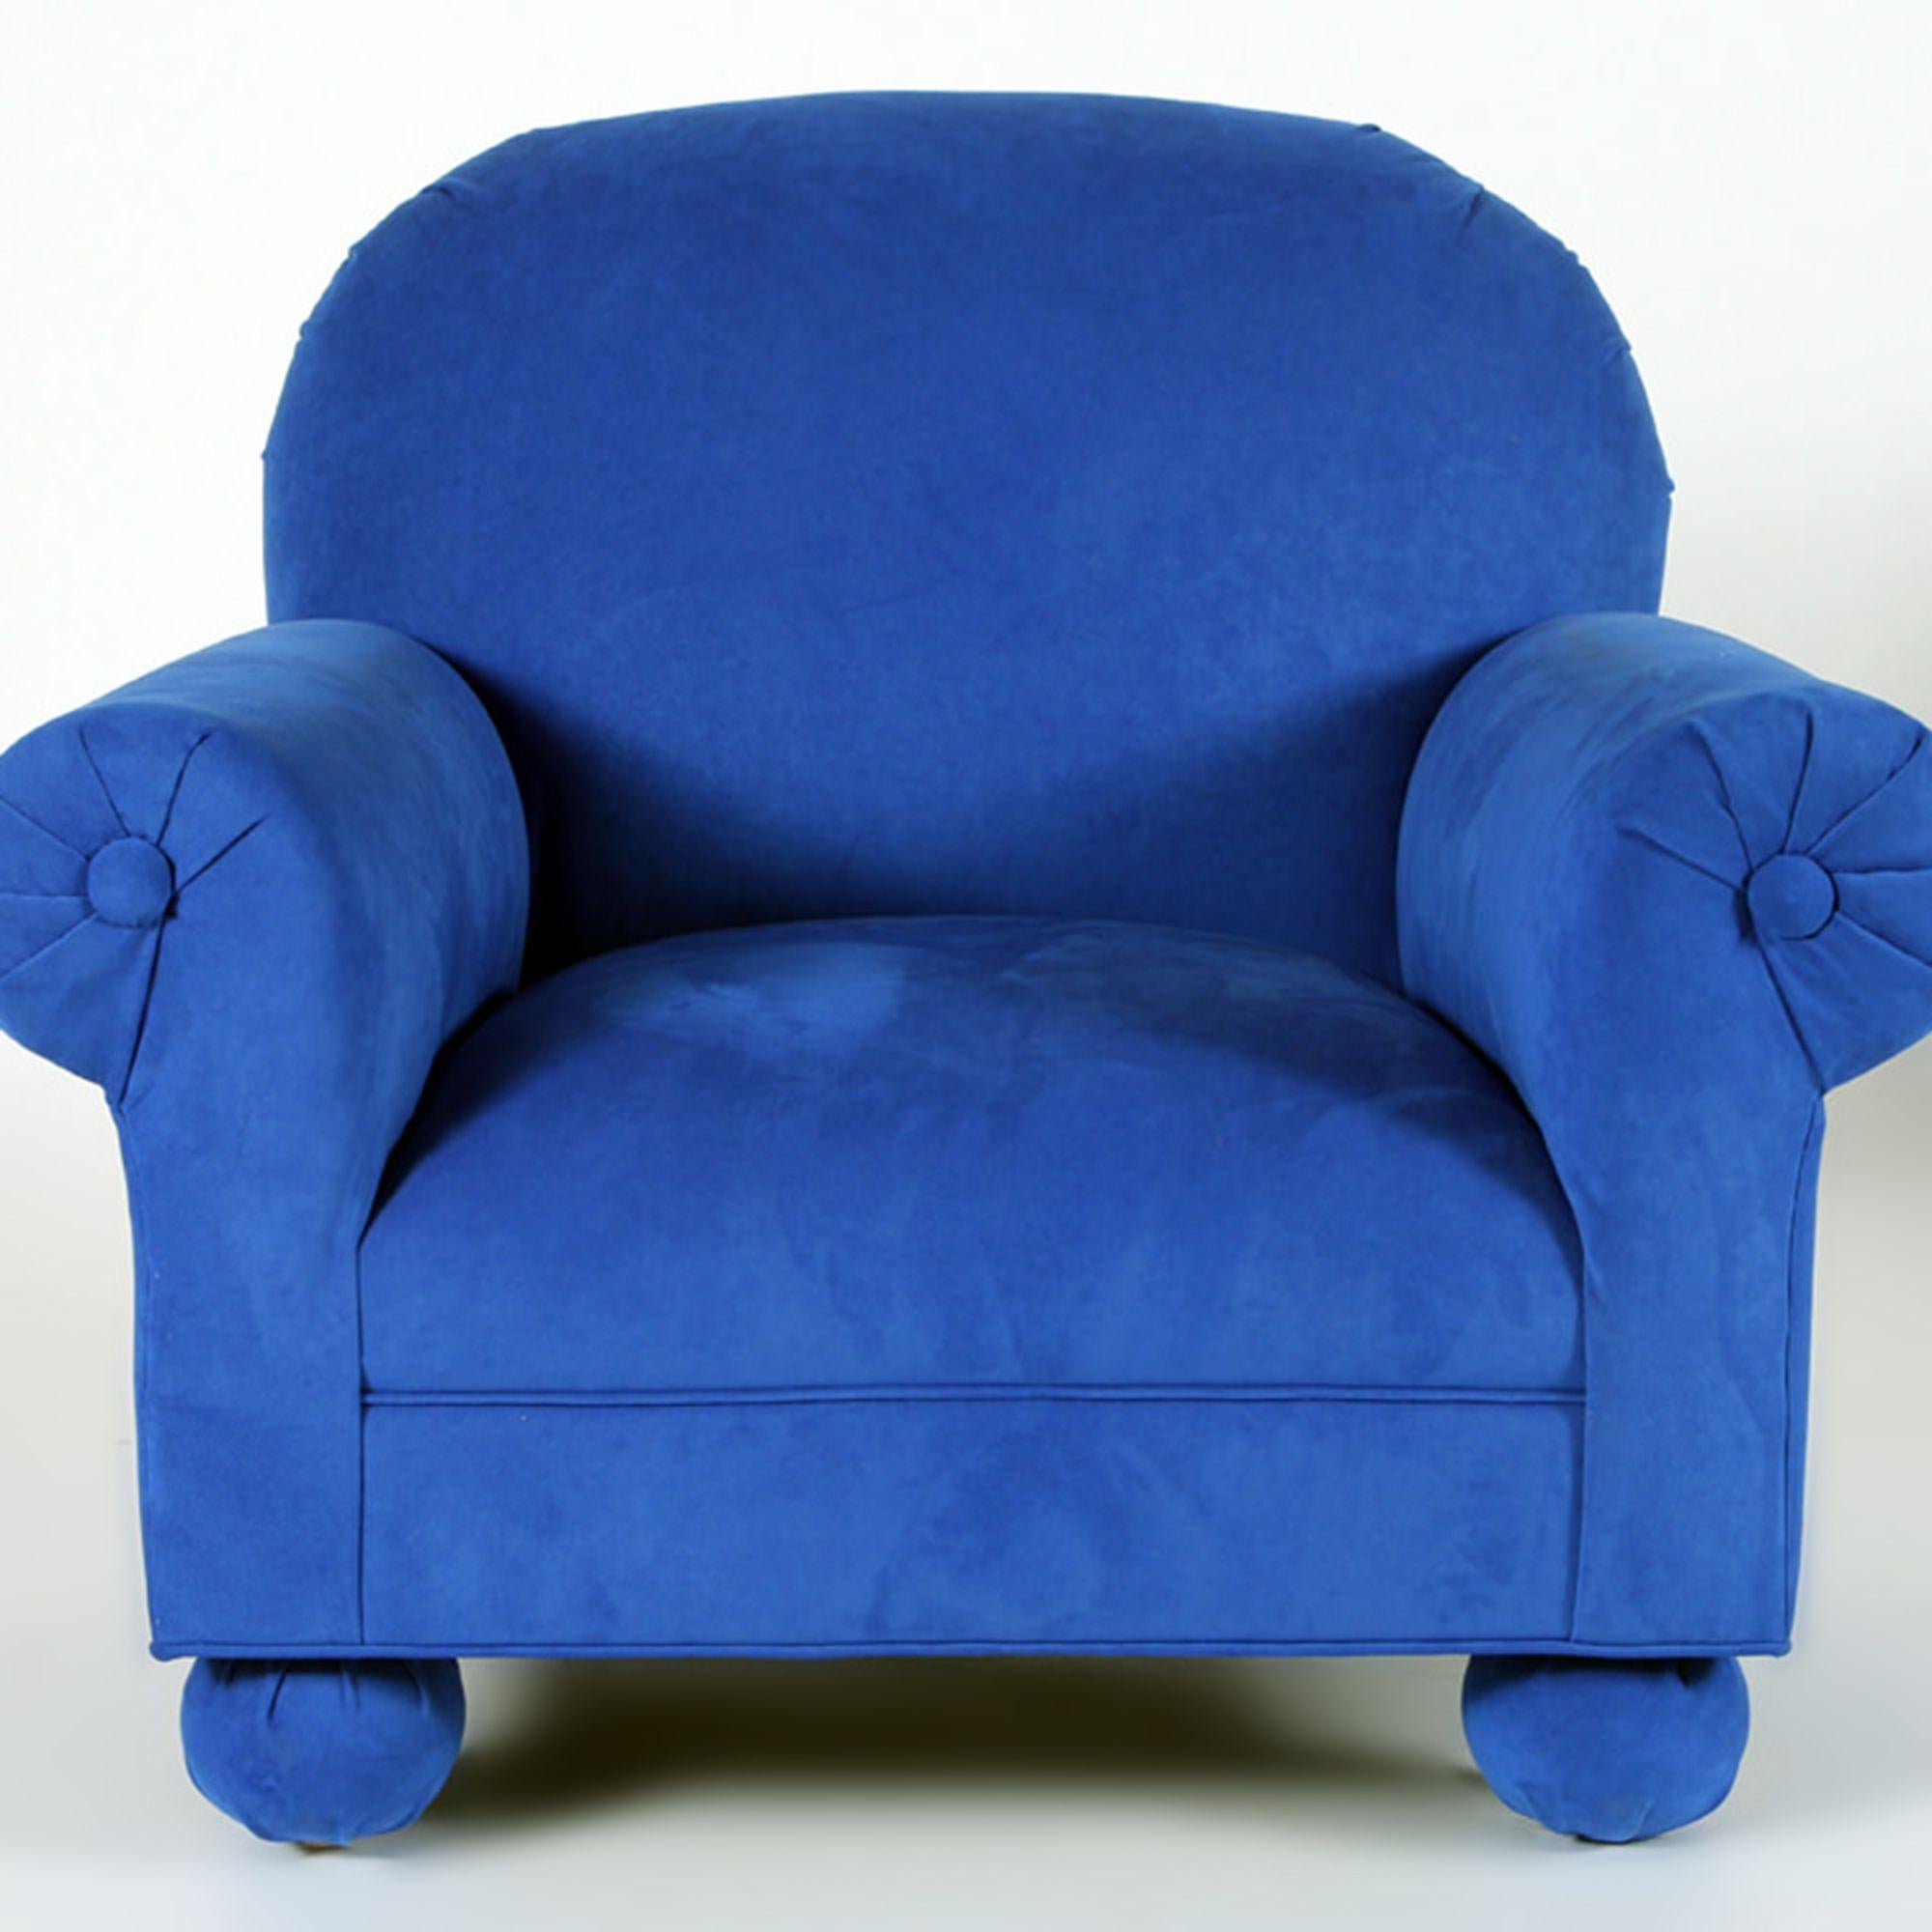 An electric blue upholstered custom made roll arm club chair. circa 1995.